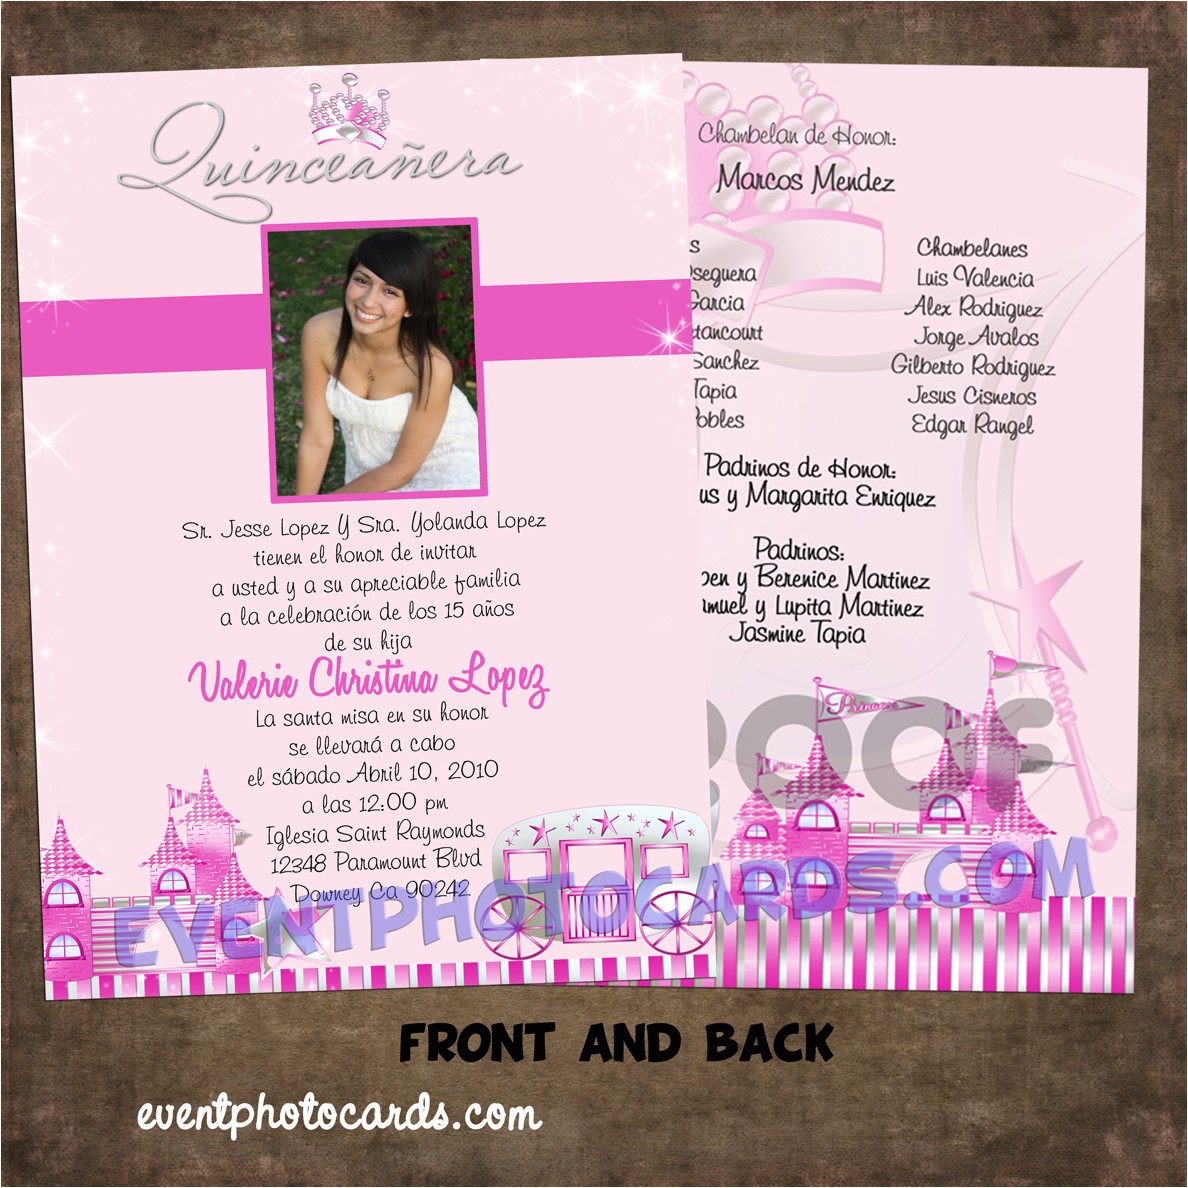 Quinceanera Invitations Online event Photo Cards